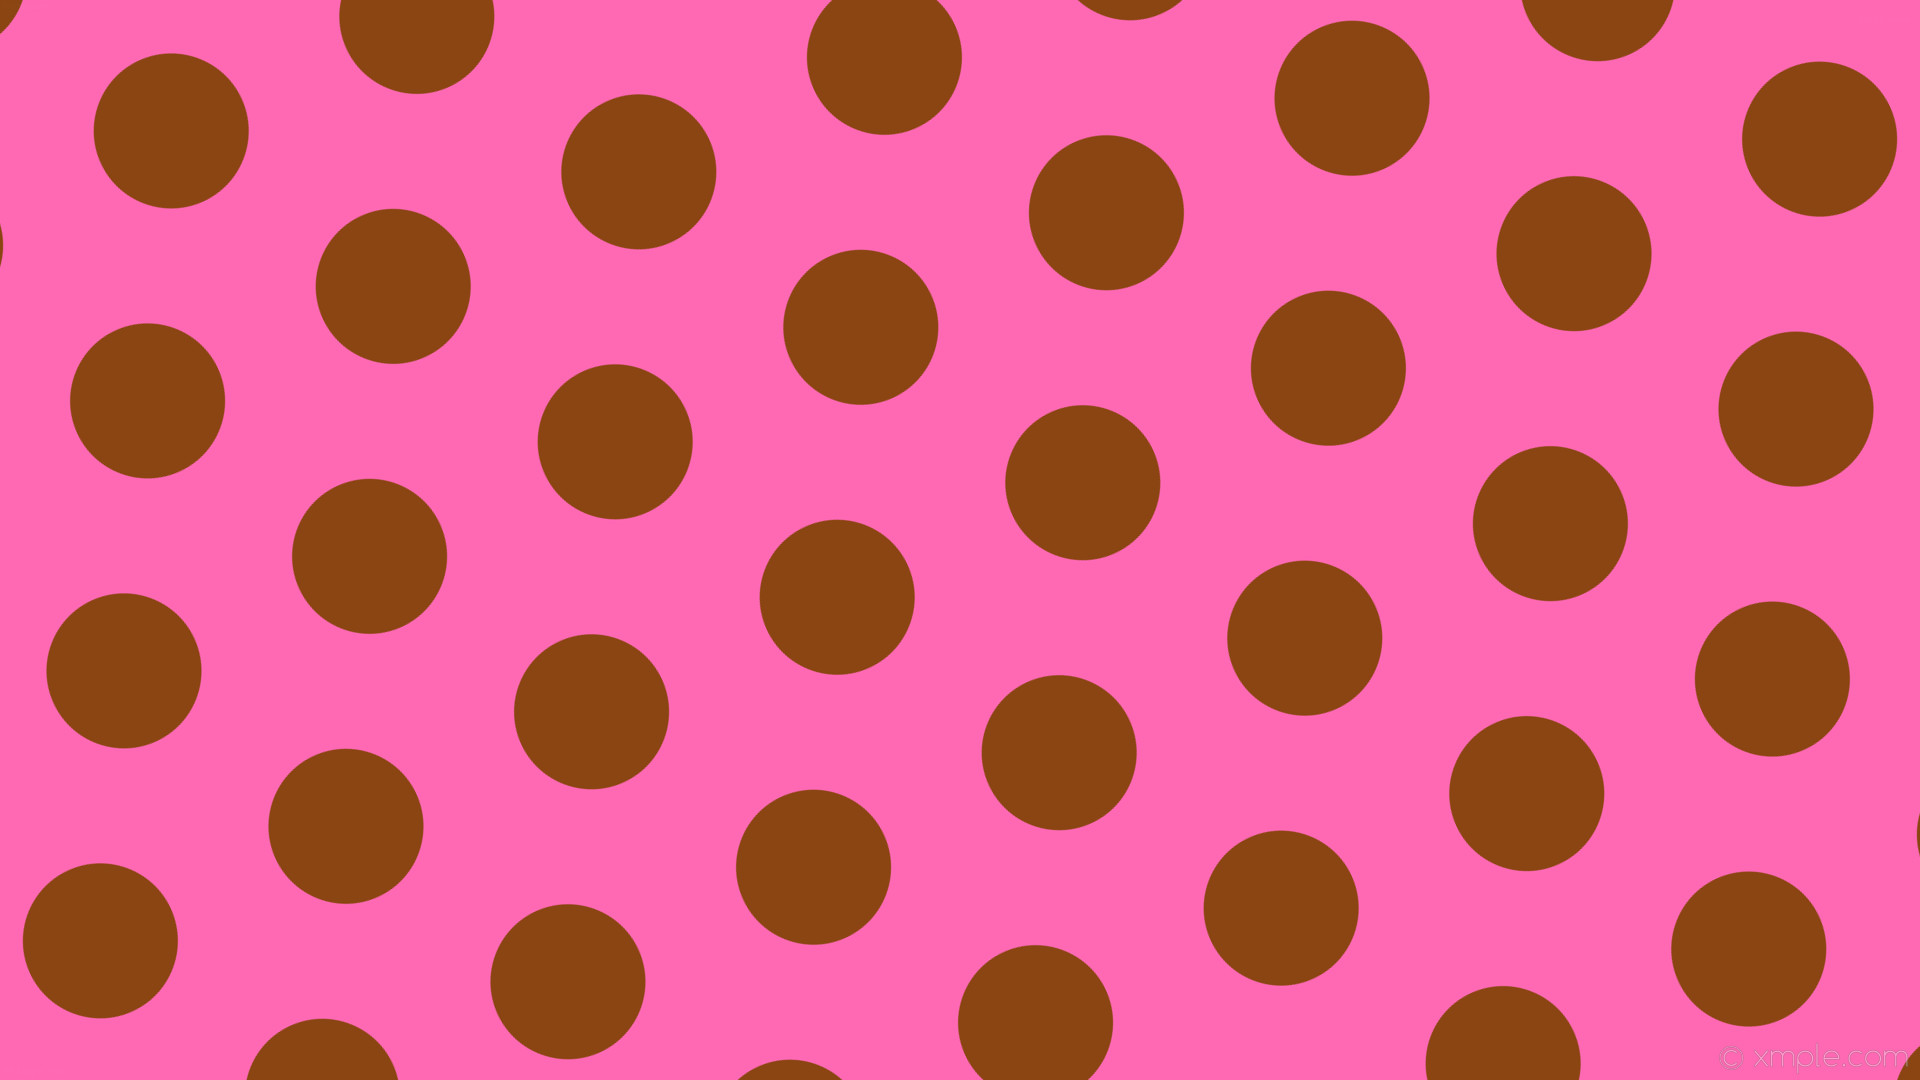 1920x1080 wallpaper polka dots brown pink hexagon hot pink saddle brown #ff69b4  #8b4513 diagonal 25